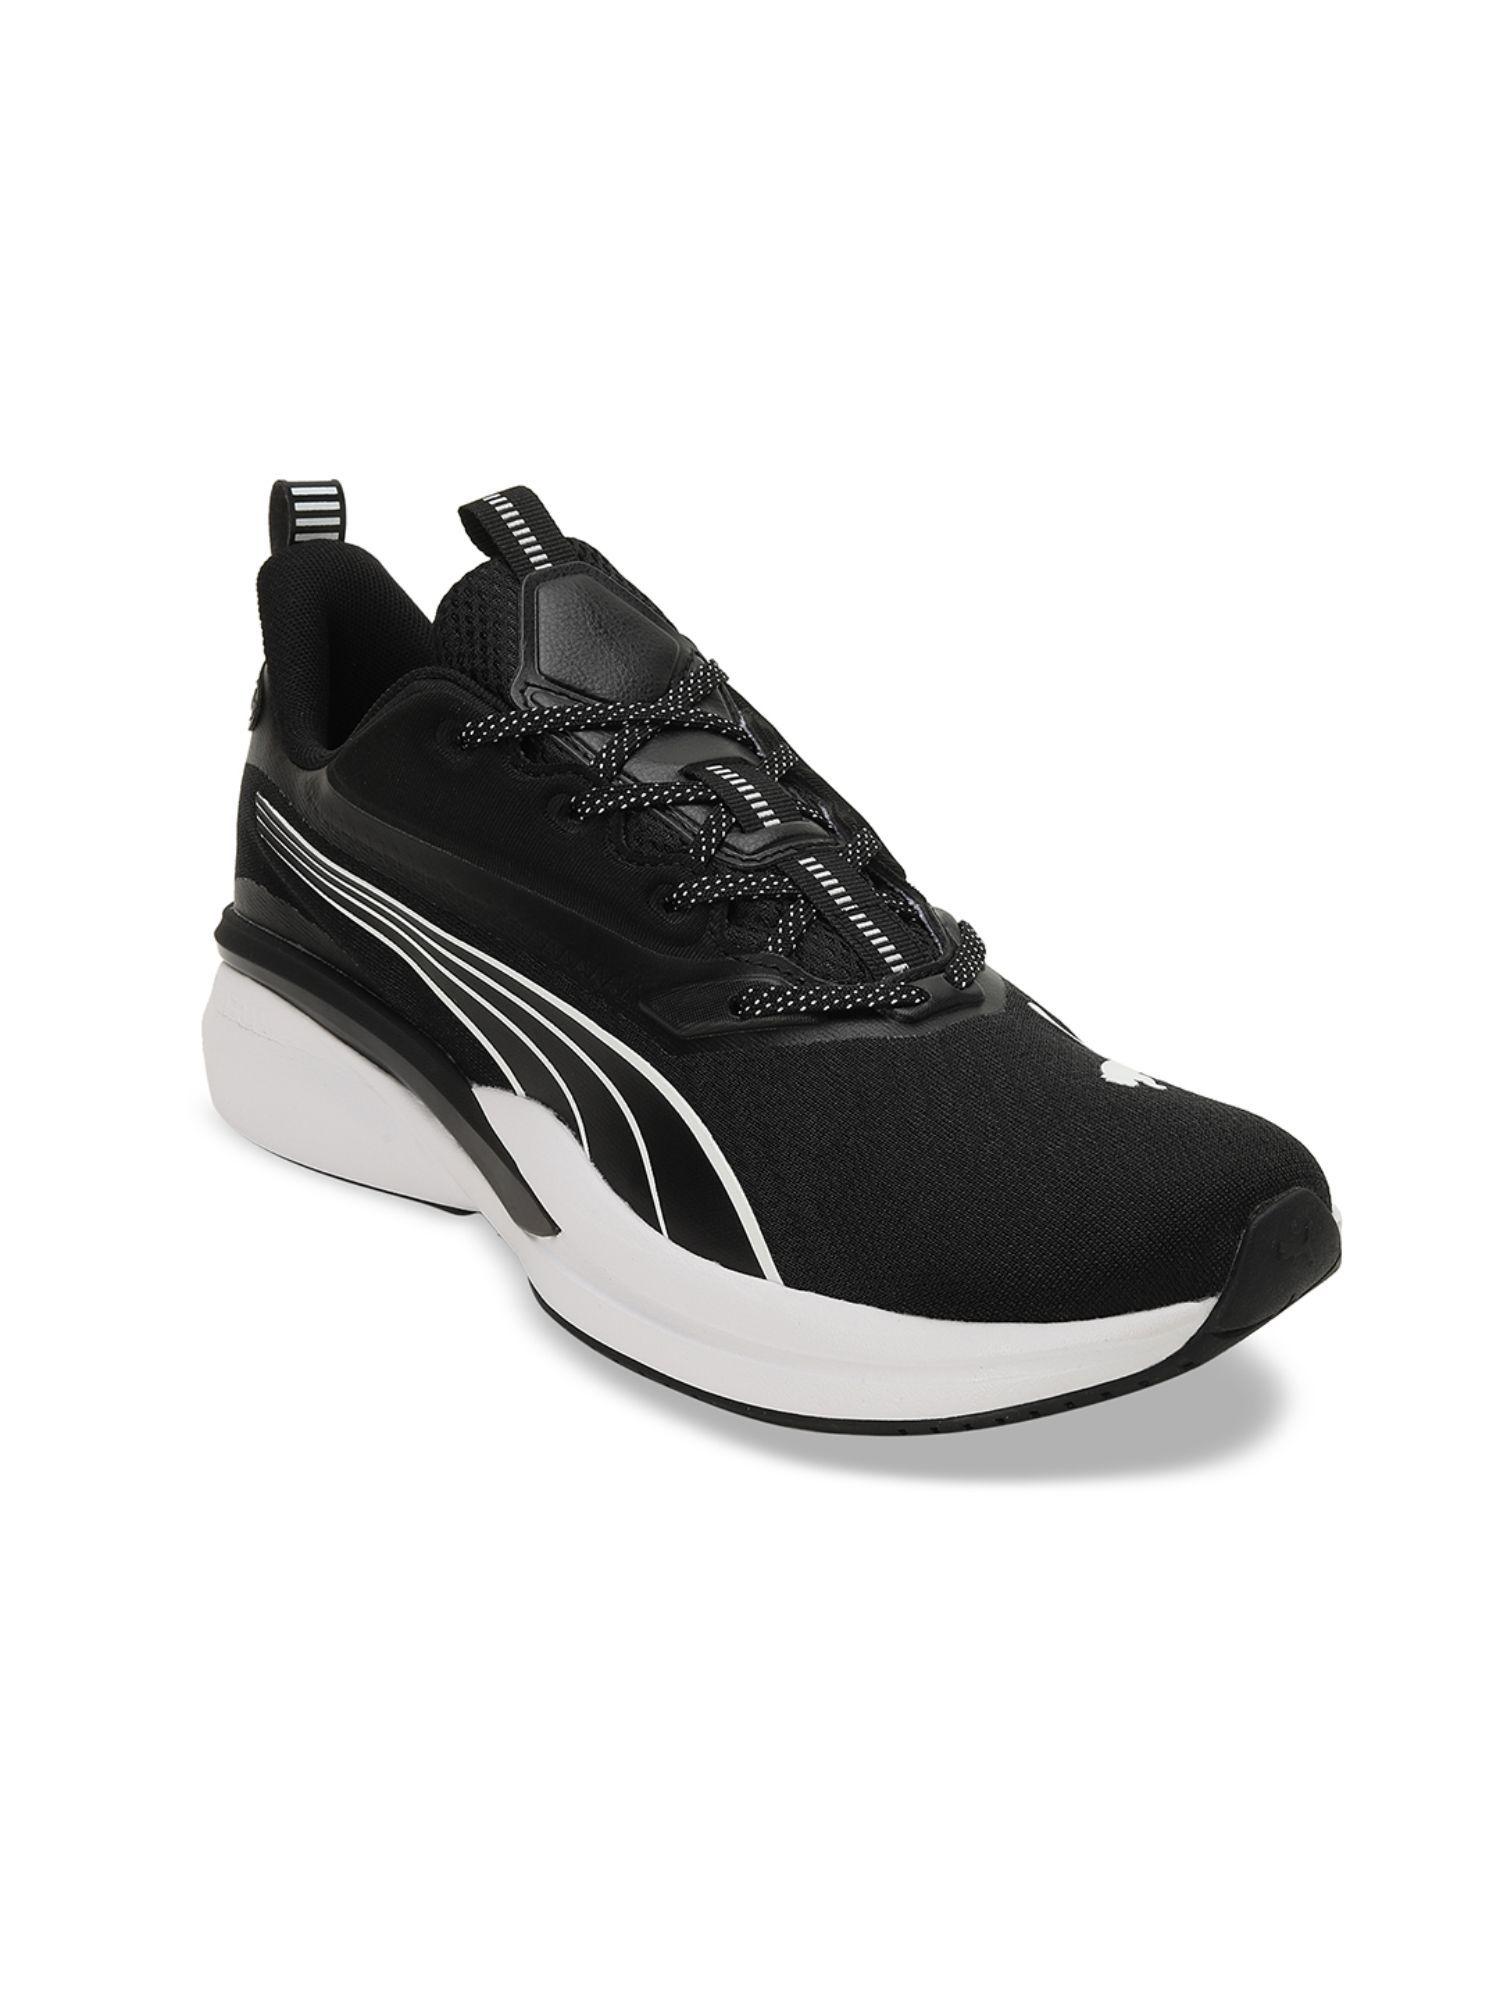 Hyperdrive Profoam Speed Unisex Black Running Shoes